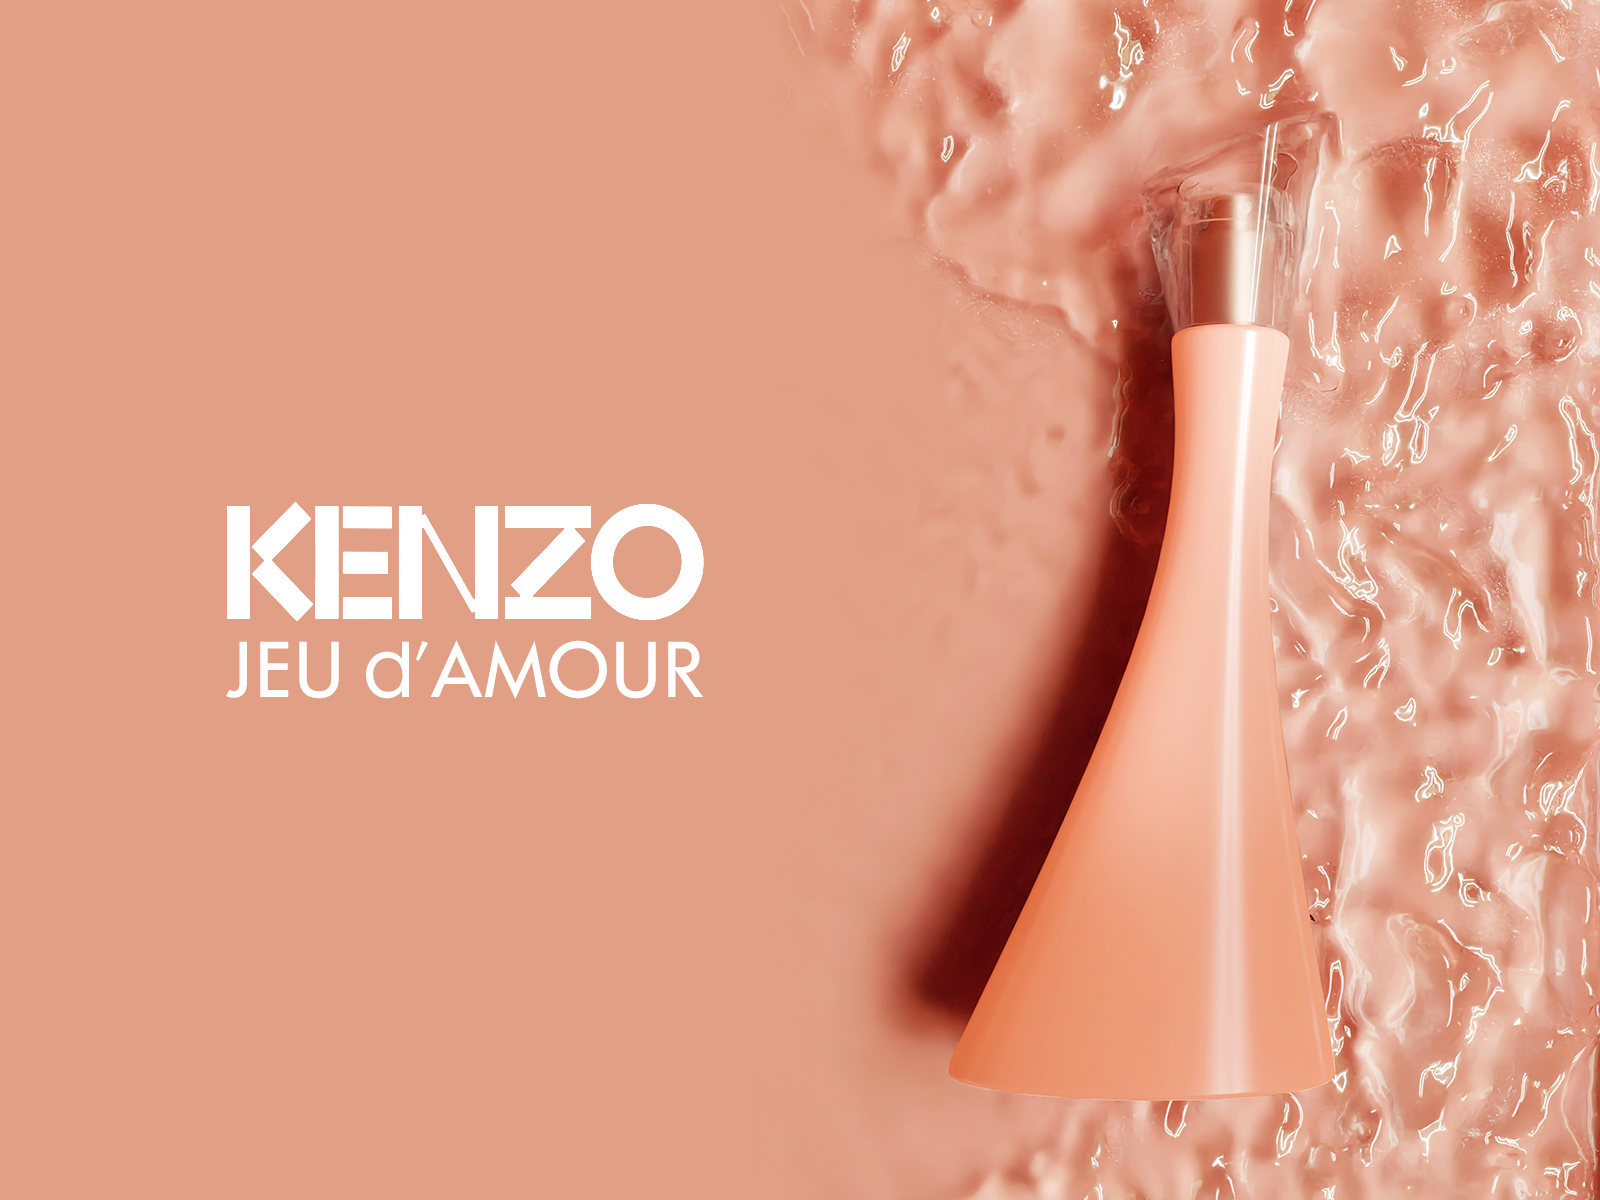 KENZO JEU d'AMOUR - Finished Projects - Blender Artists Community